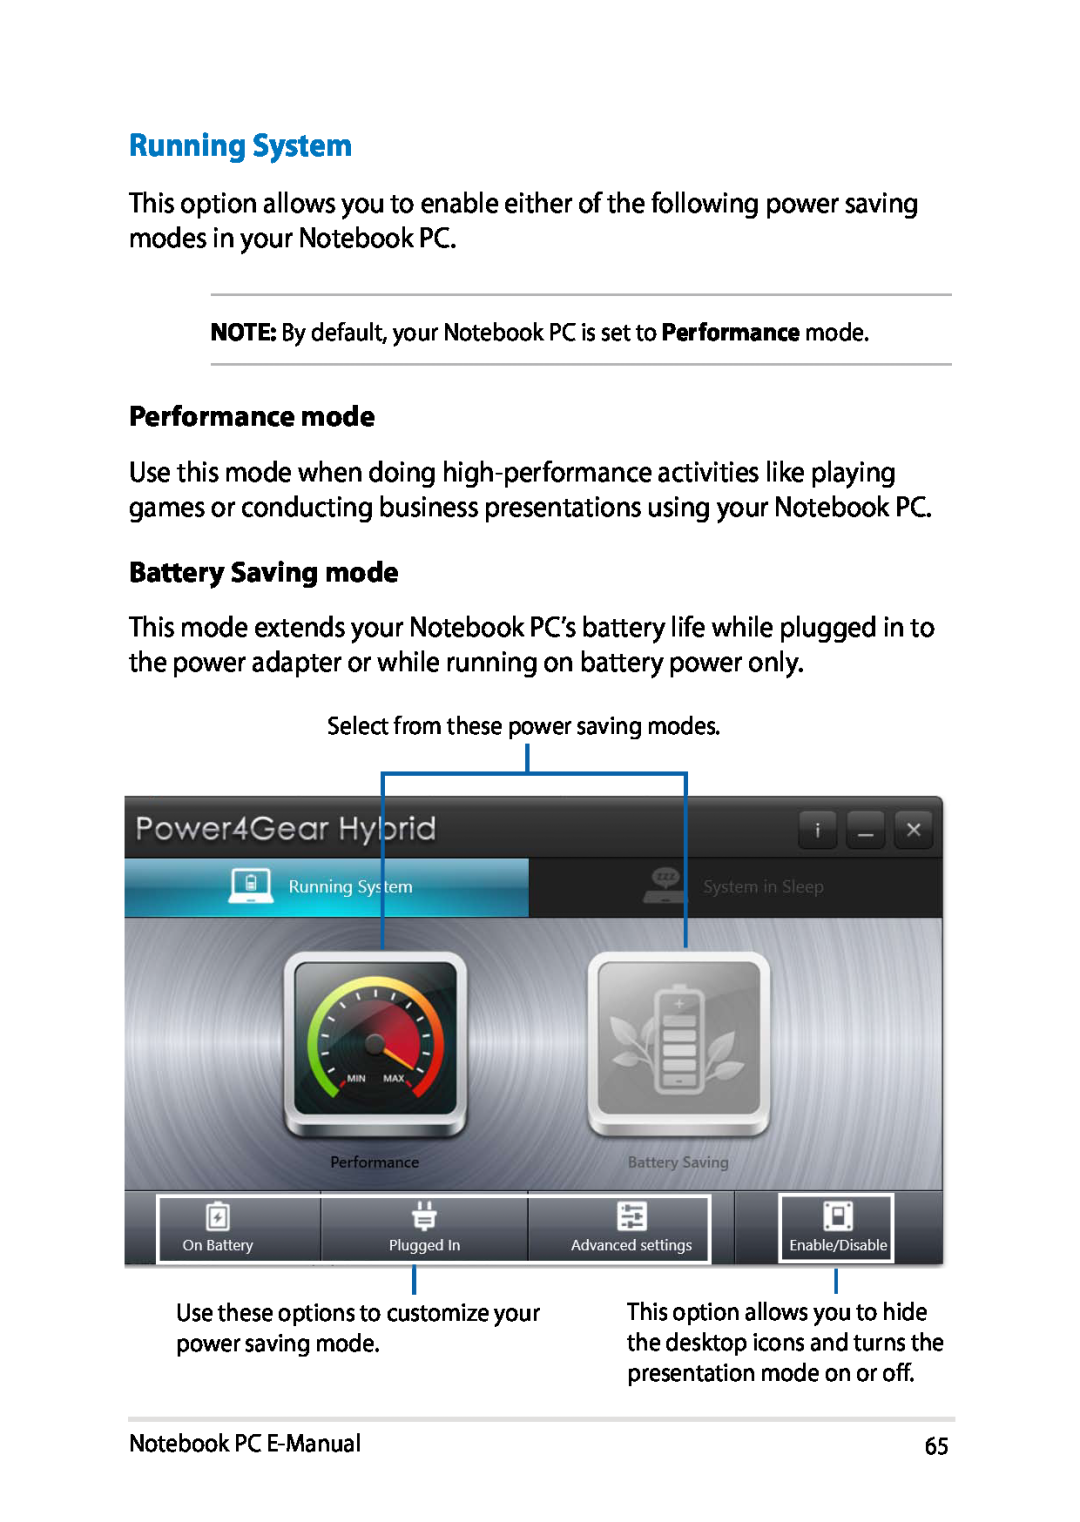 Asus E8438 manual Running System, Performance mode, Battery Saving mode 